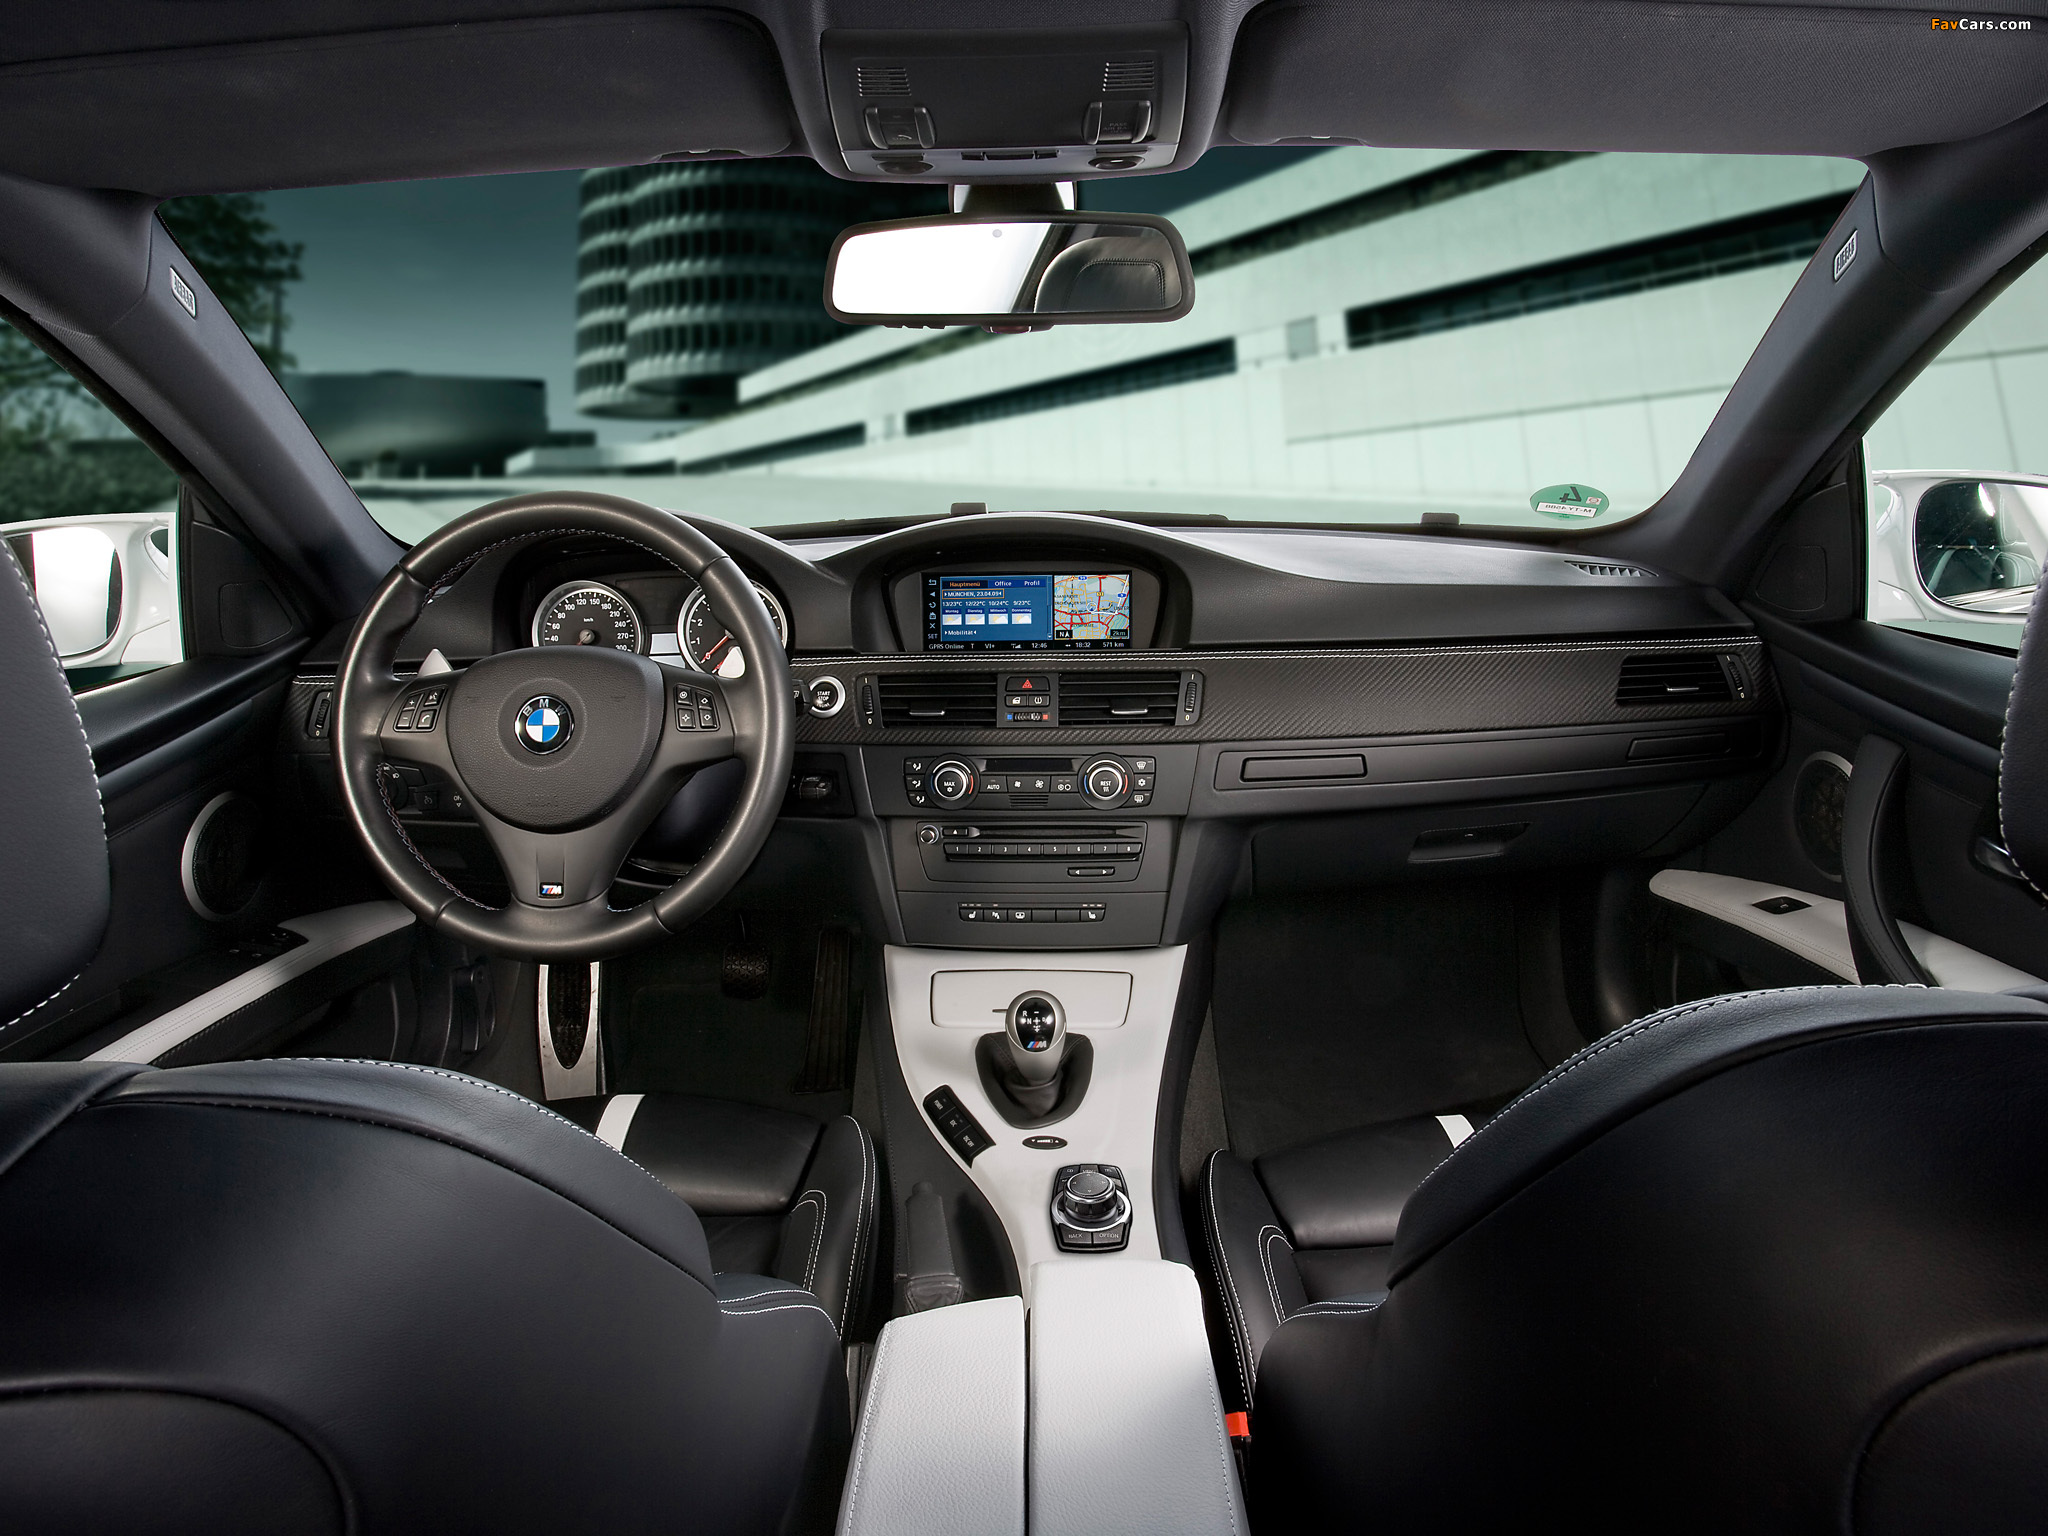 BMW M3 Coupe Alpine White Edition (E92) 2009 pictures (2048 x 1536)